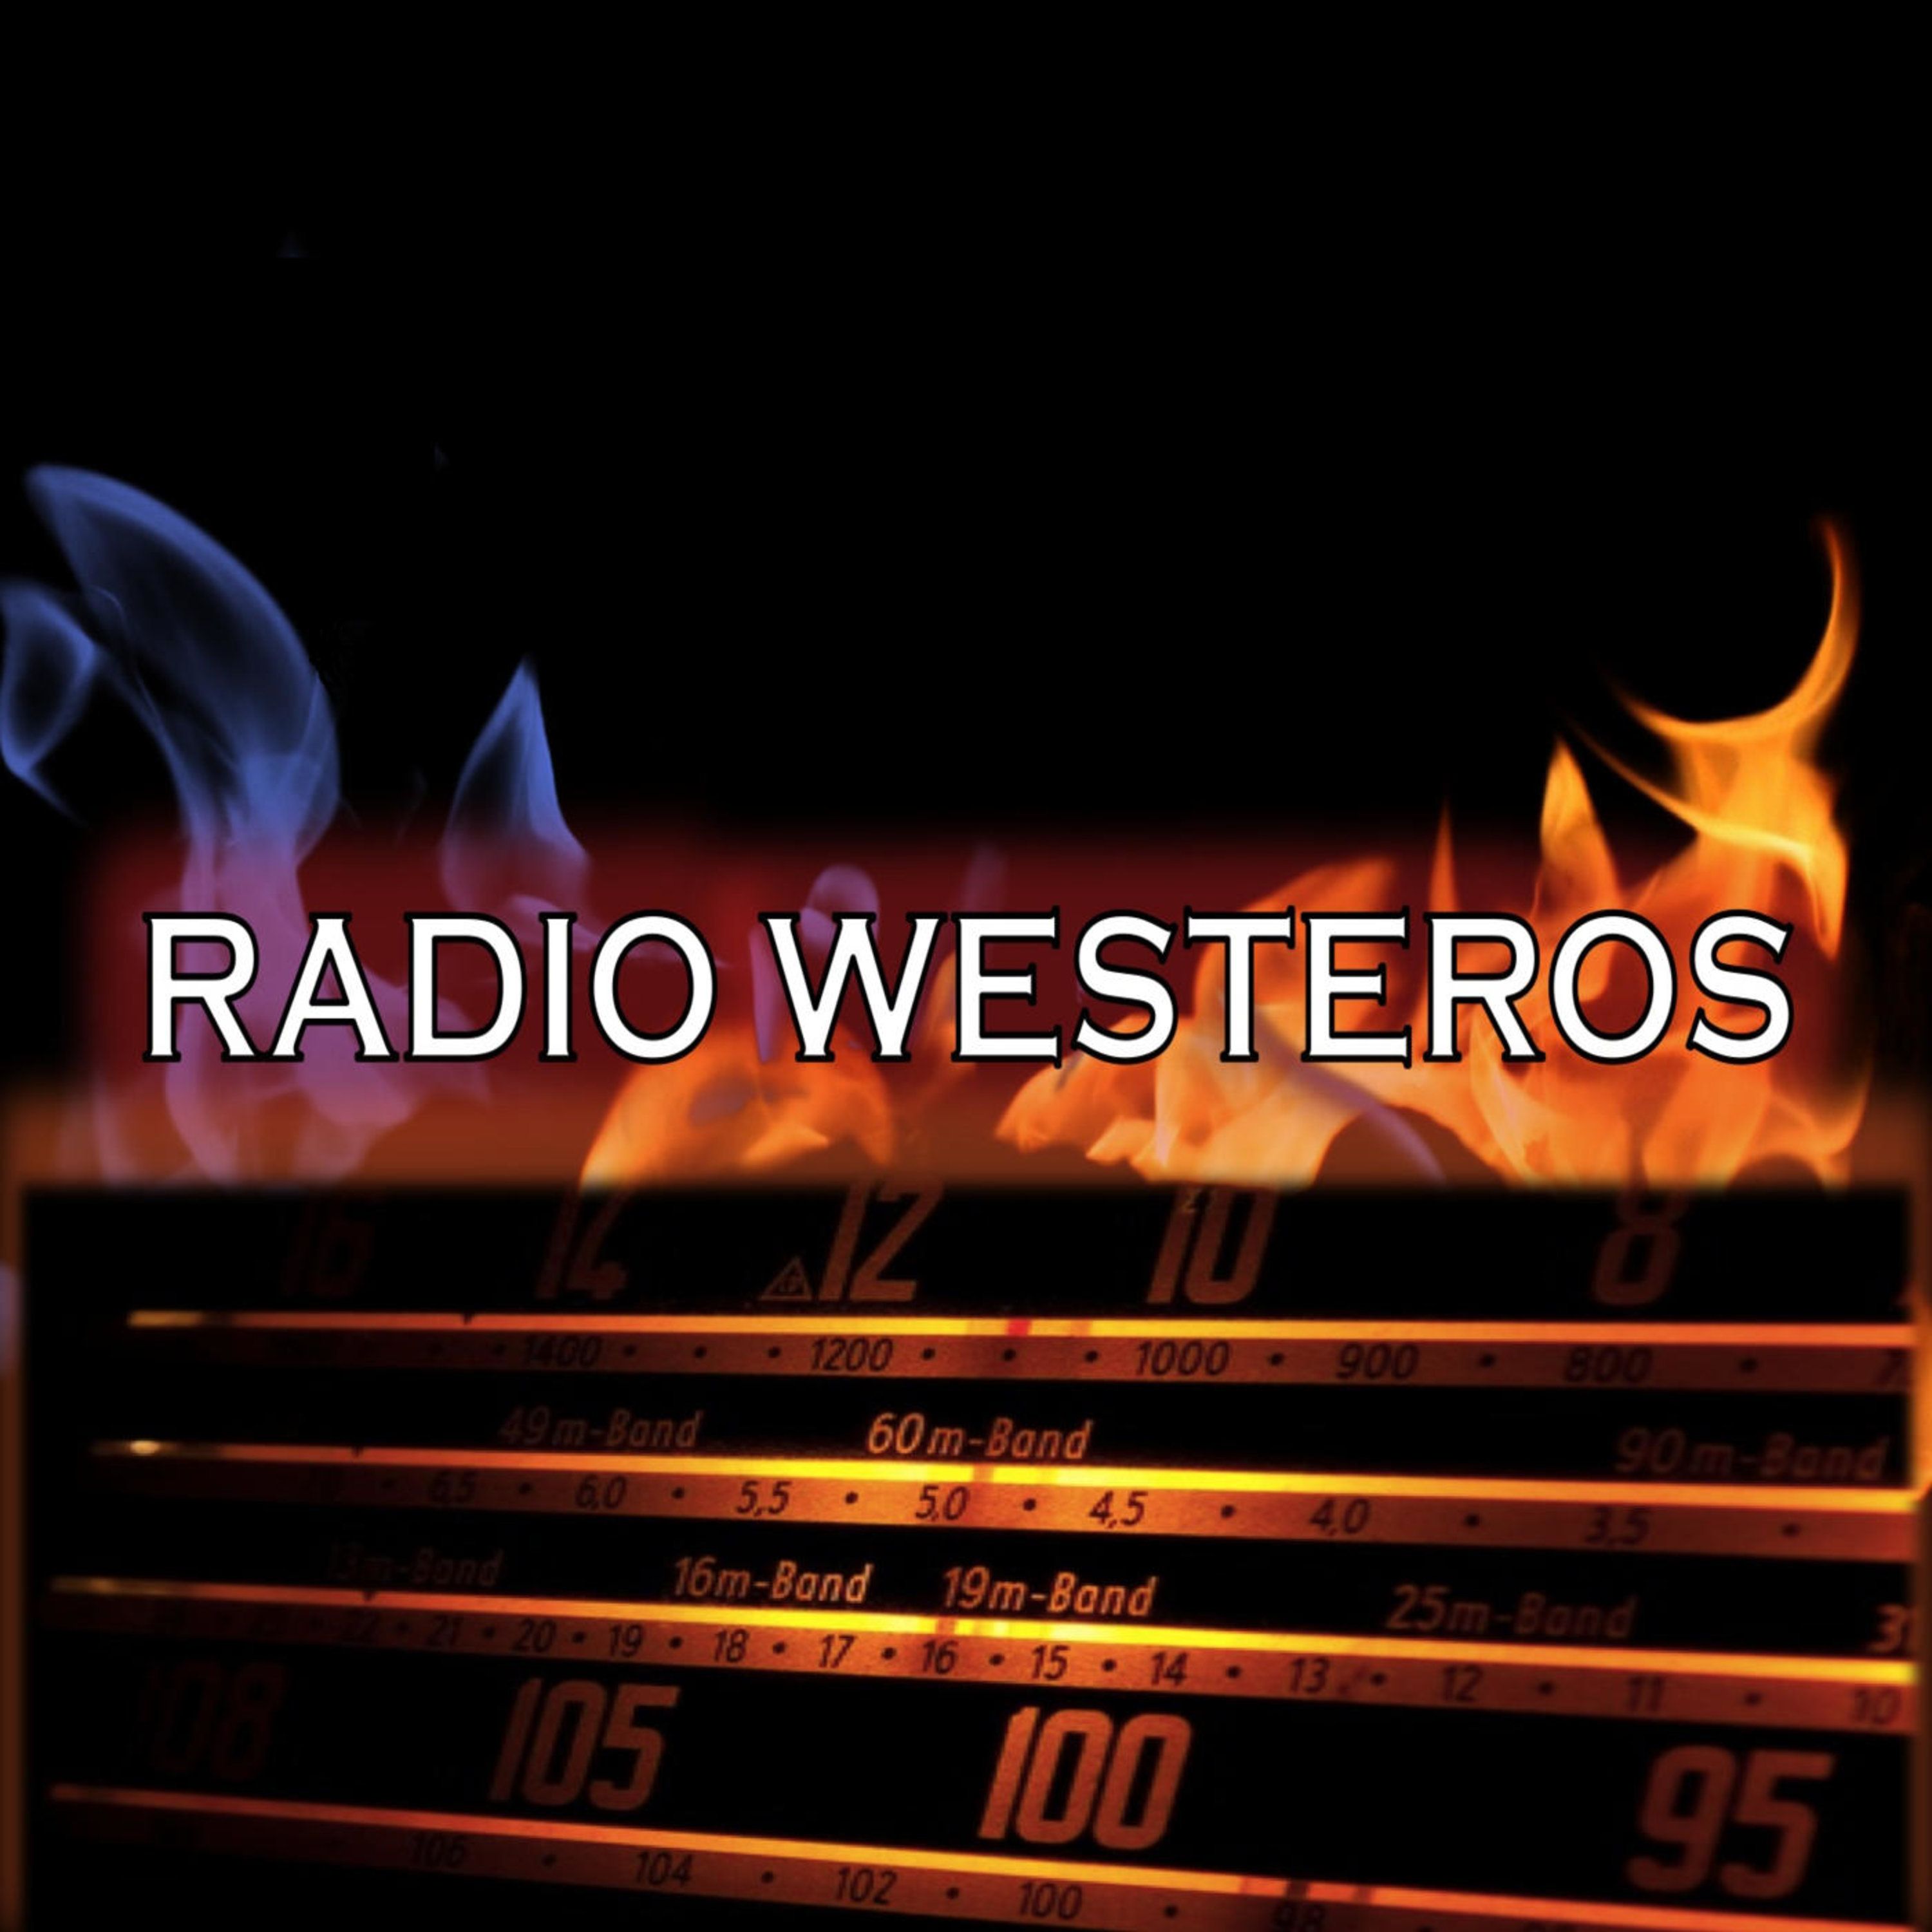 Radio Westeros E41 - At the Crossroads